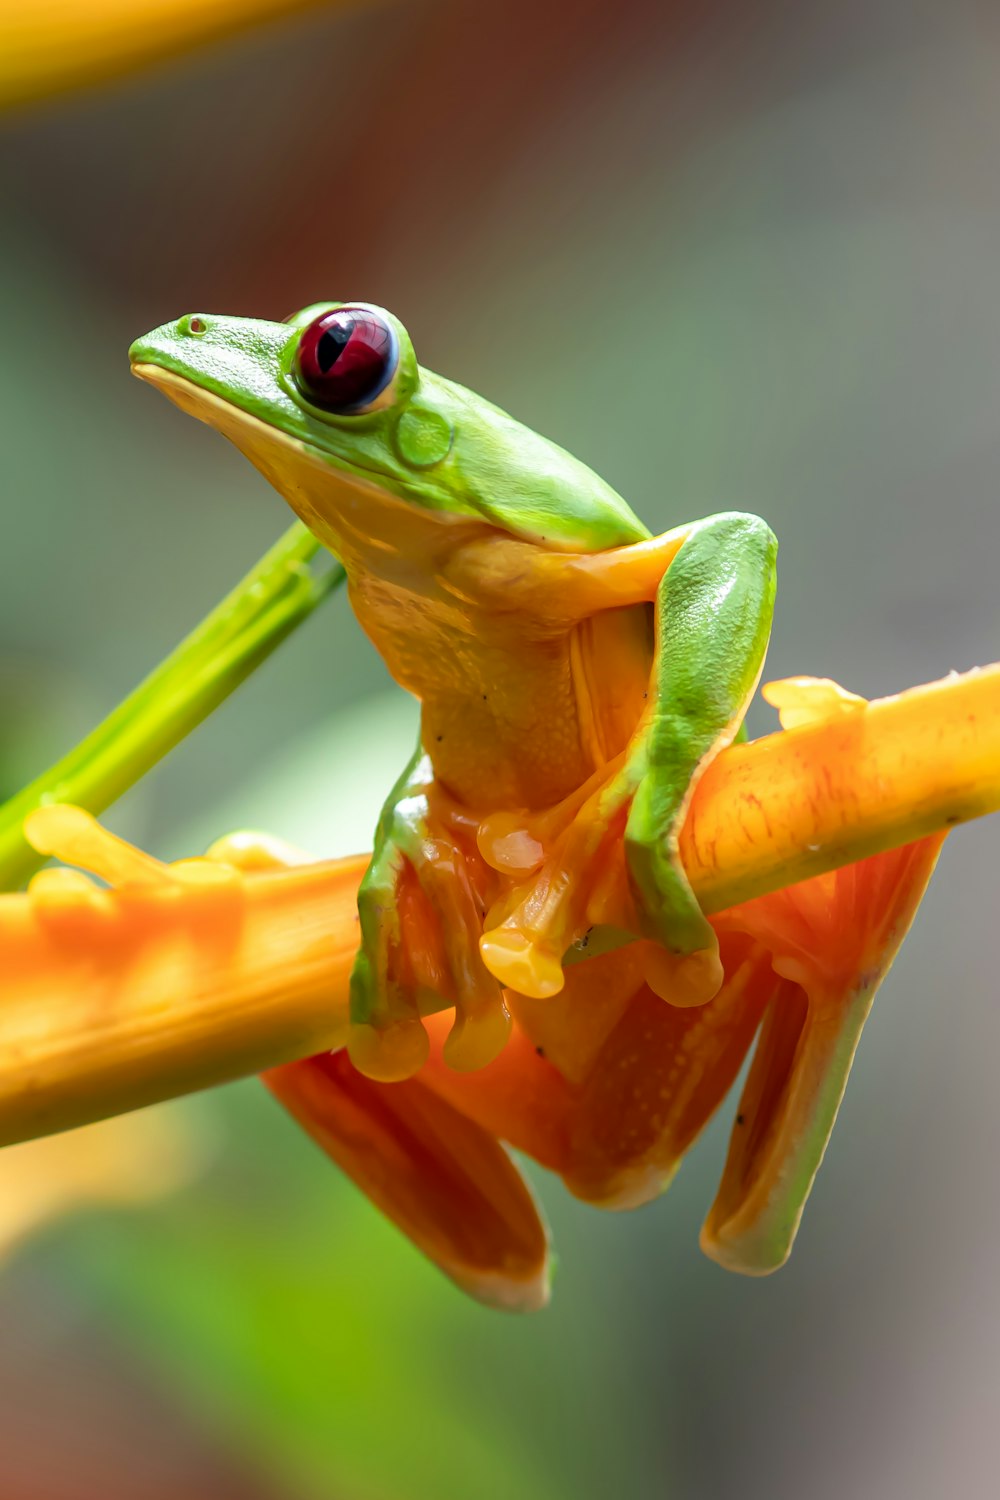 green frog on brown stem